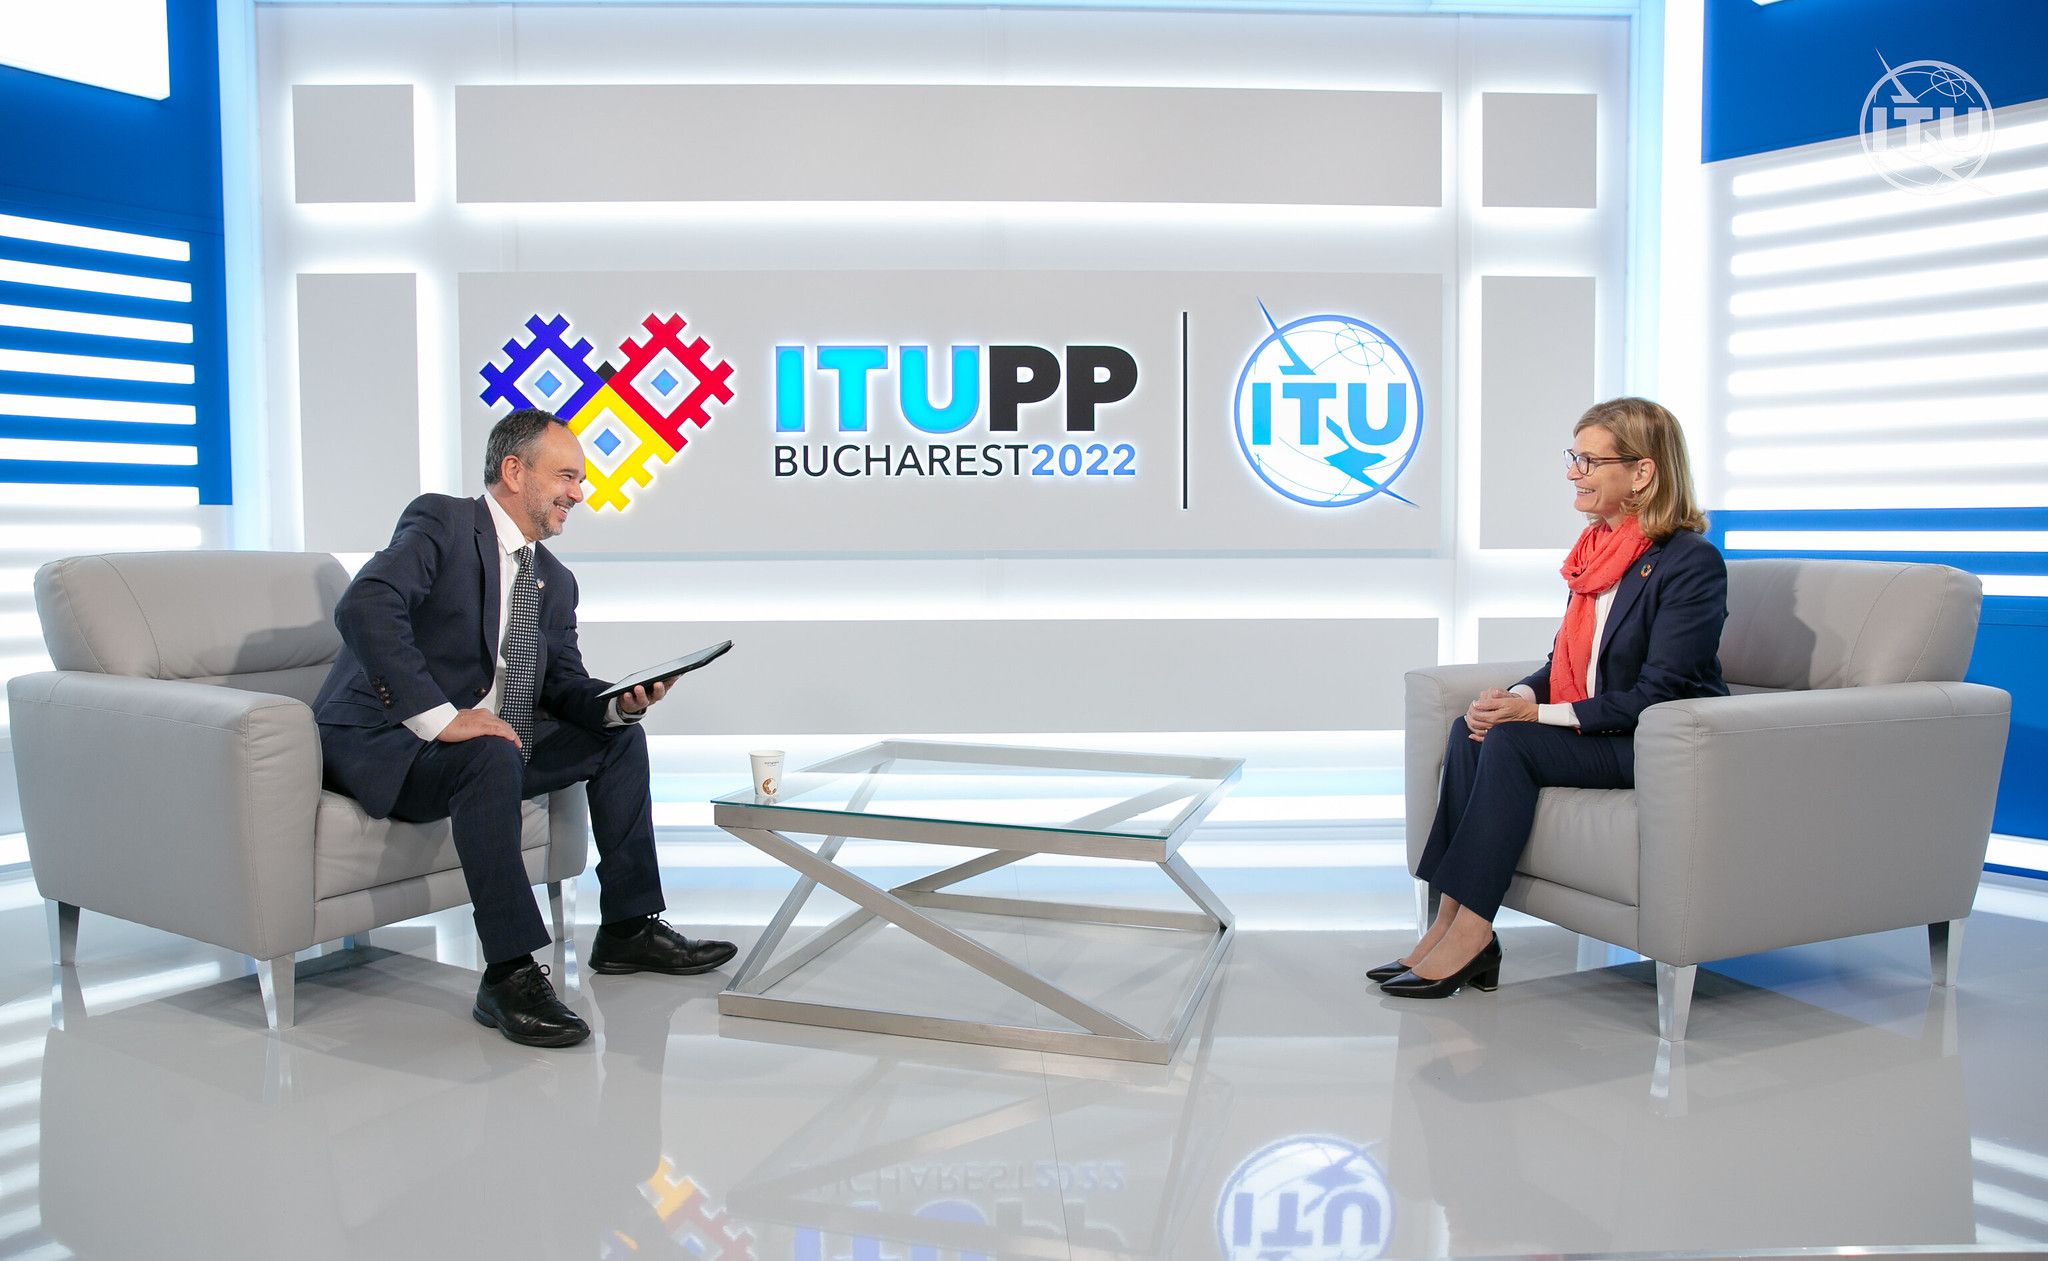 Meet ITU’s next top elected officials: Doreen Bogdan-Martin featured image